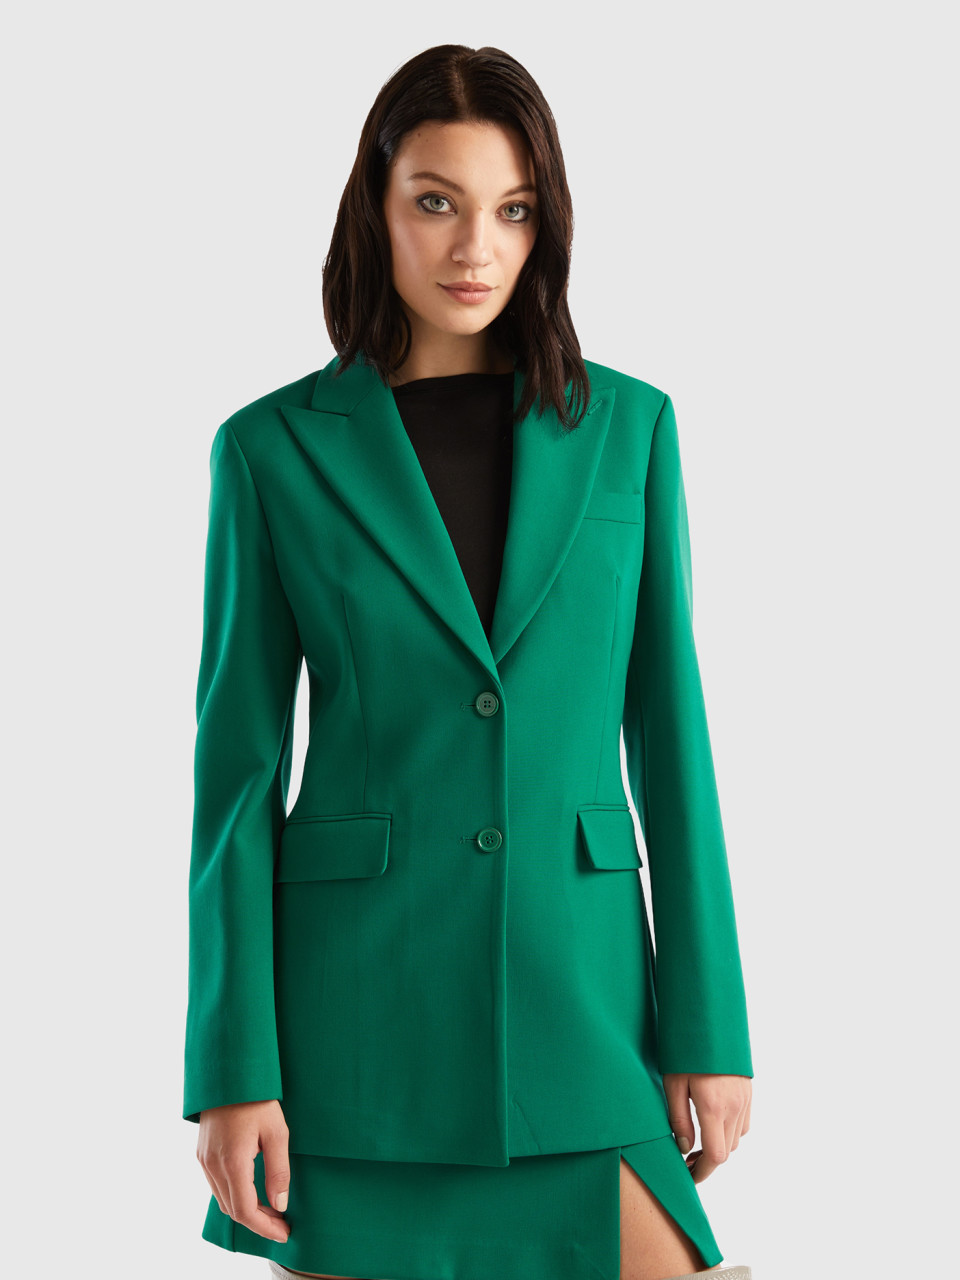 Benetton, Fitted Jacket, Green, Women